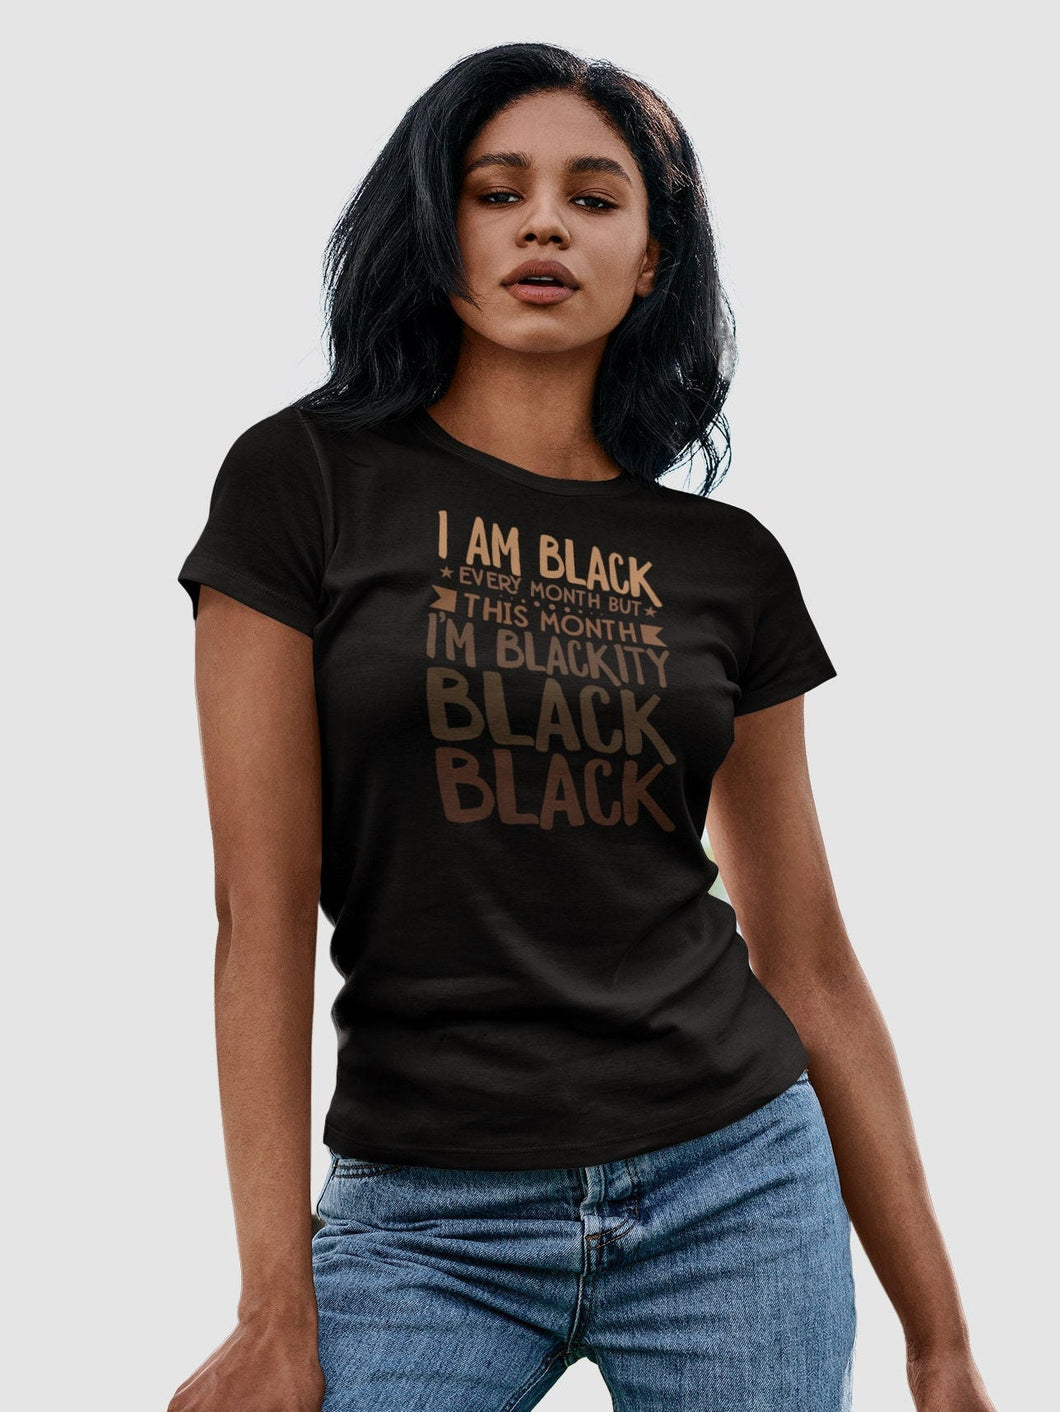 I Am Black Every Month But This Month I'm Blackity Shirt, Black, BLM Shirt, Black Pride Shirt